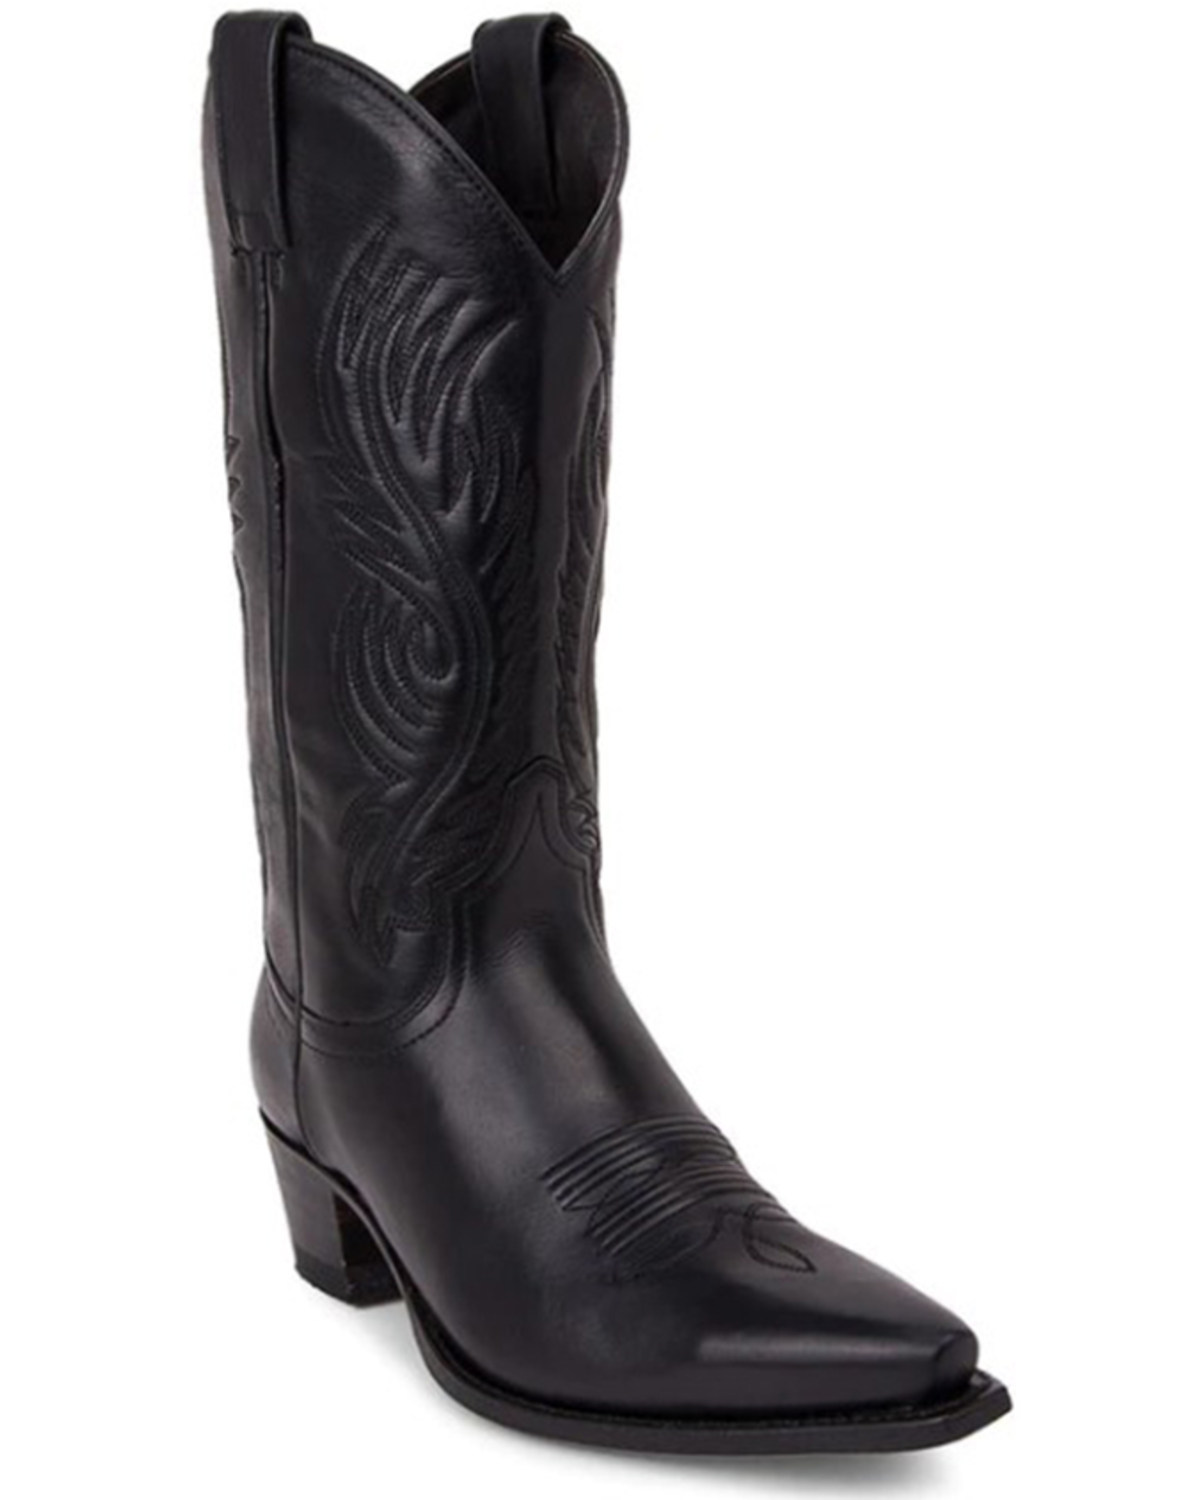 Sendra Women's Judy Salvaje Western Boots - Snip Toe